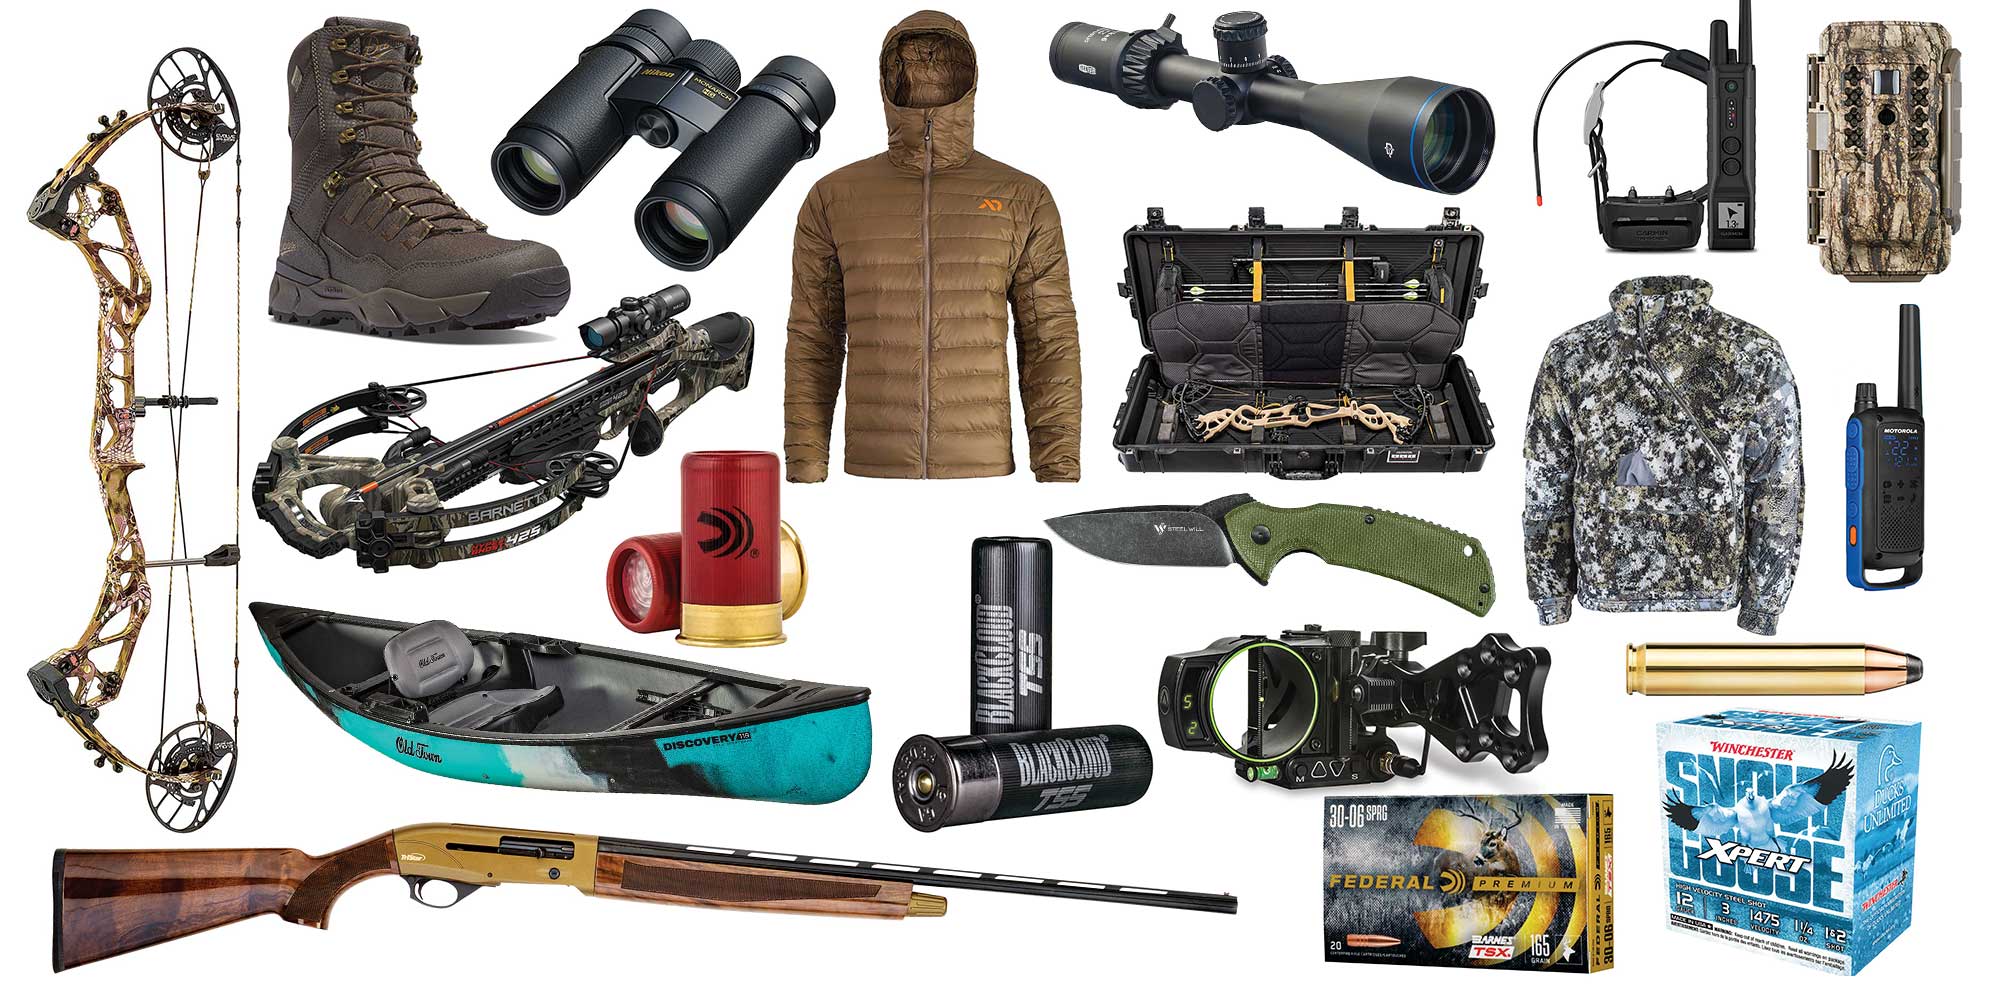 Hunting Gear - Hunting Supplies & Equipment